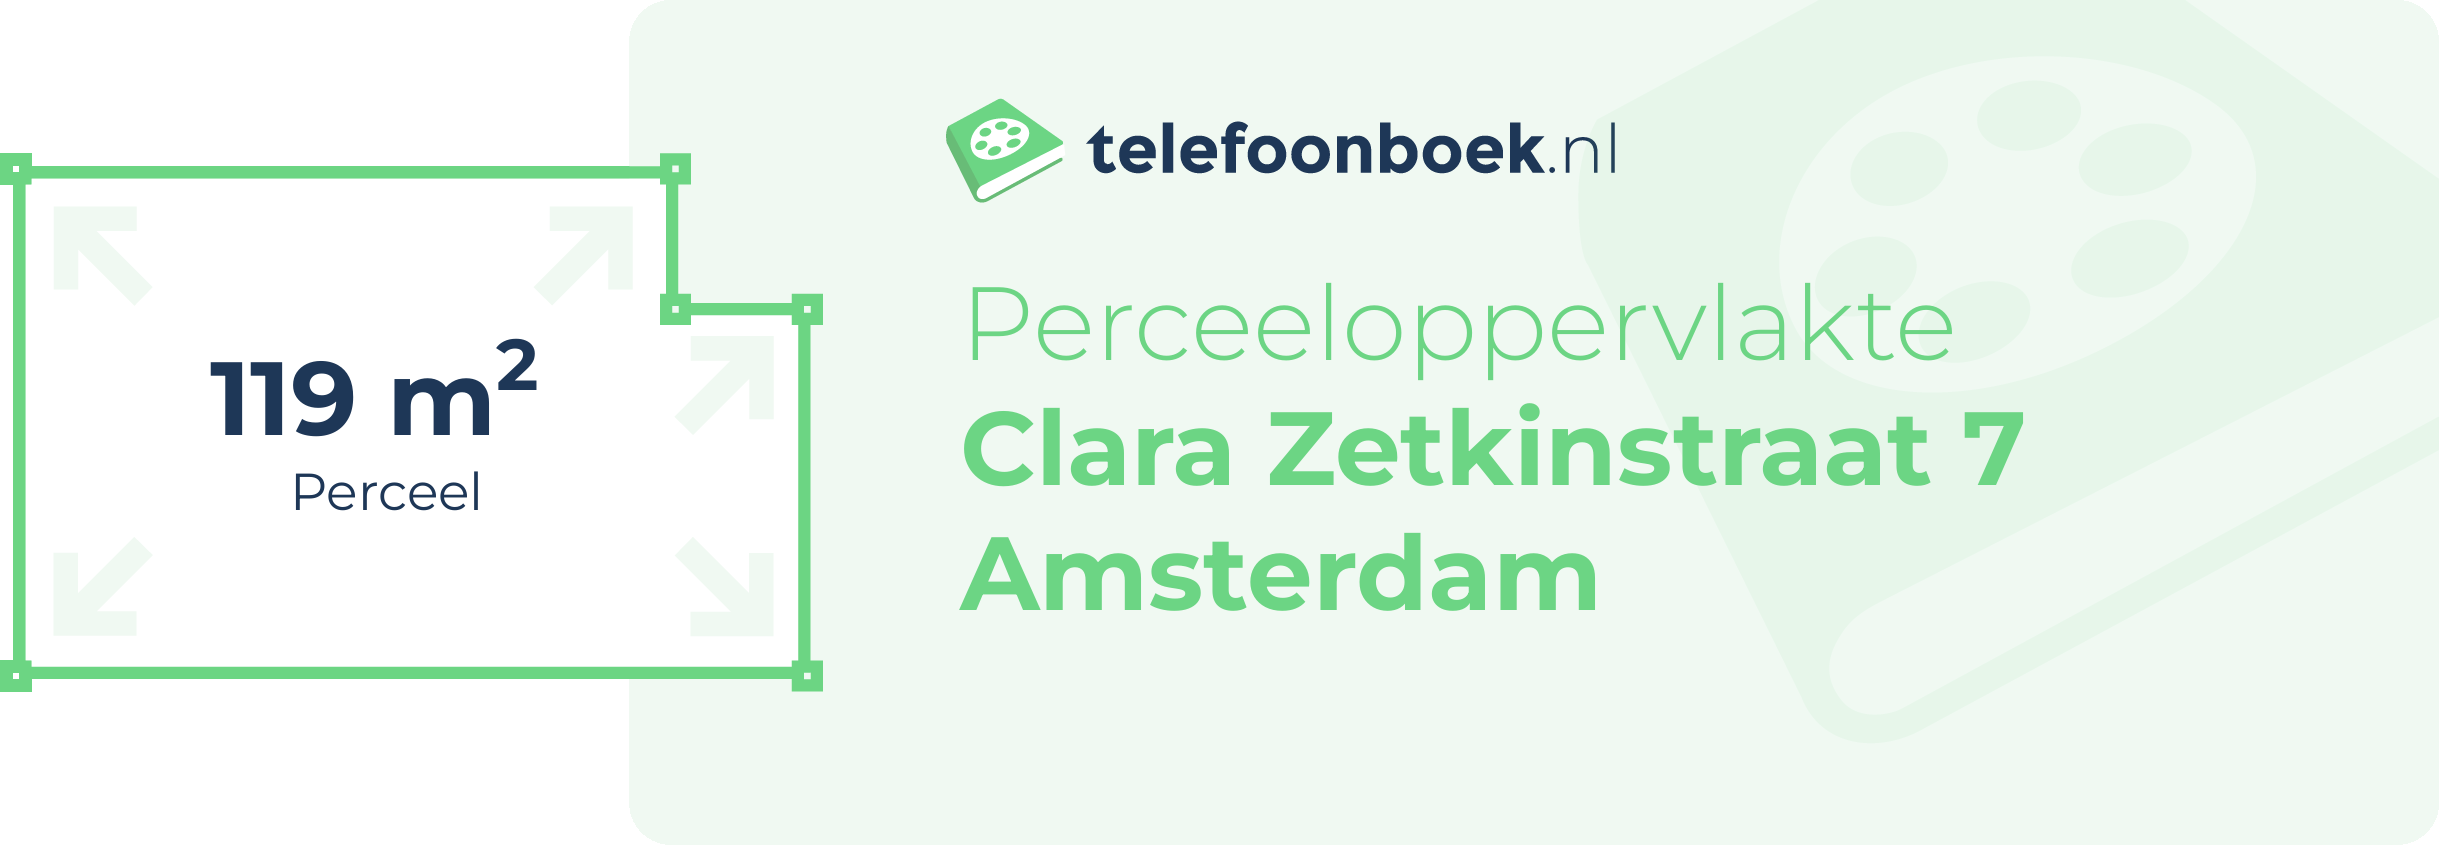 Perceeloppervlakte Clara Zetkinstraat 7 Amsterdam